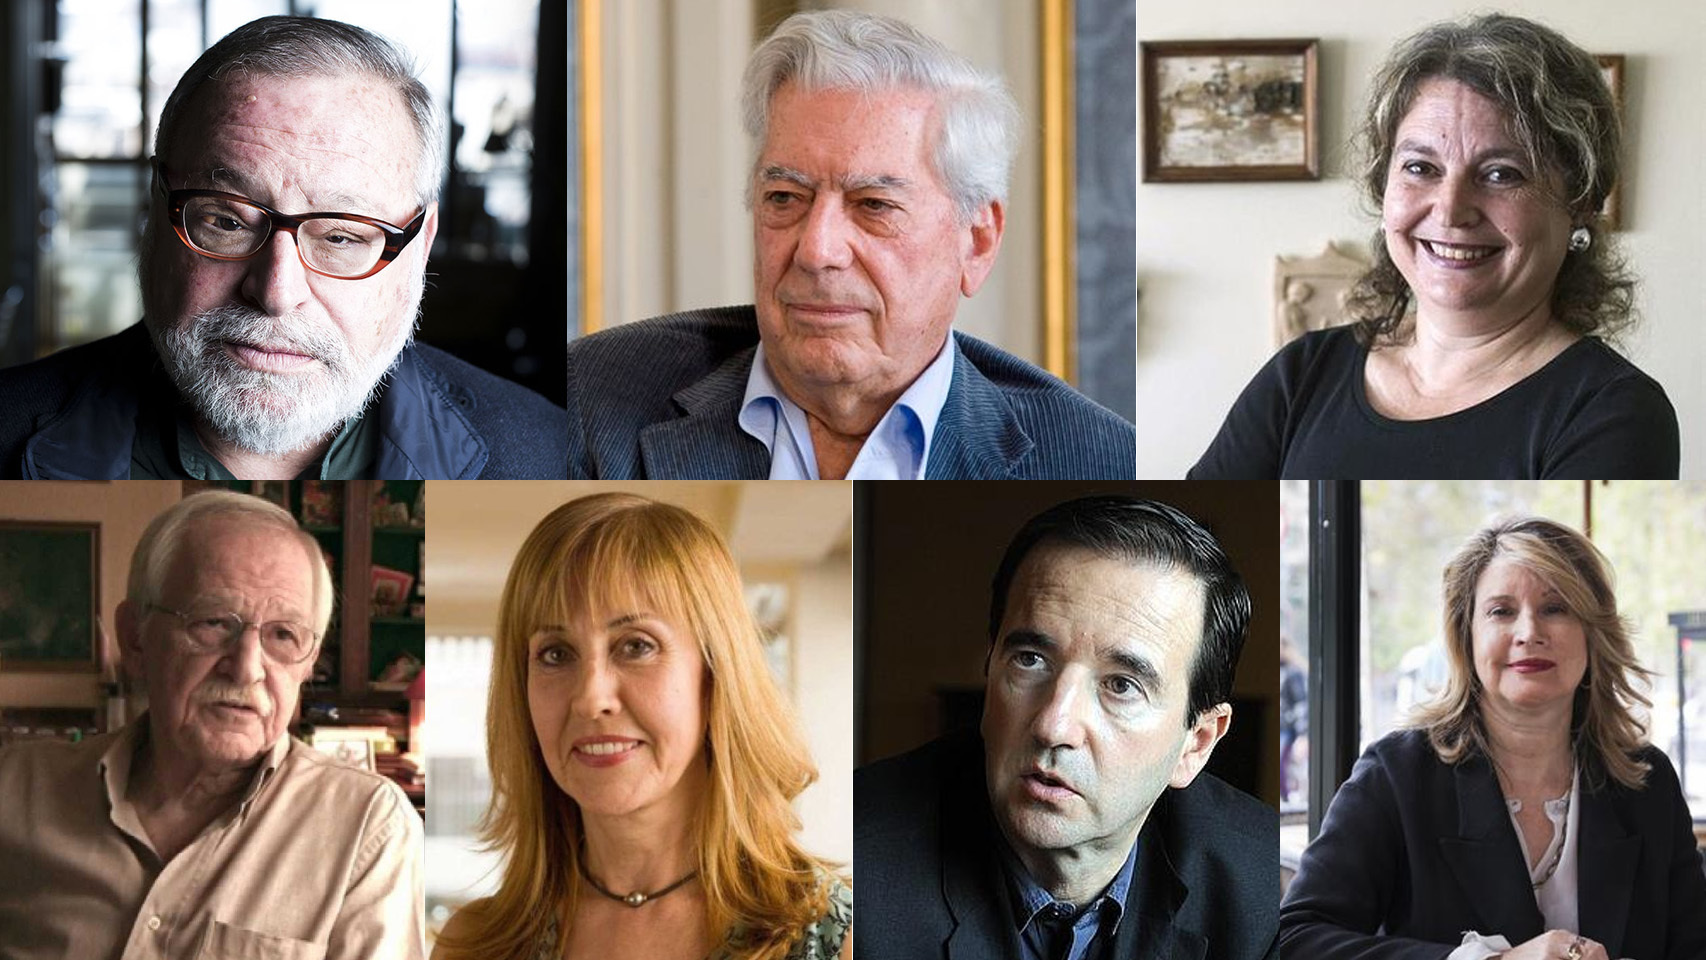 Savater, Vargas Llosa, Roca Barea, Escohotado, Teresa Giménez, Casariego y Monmany